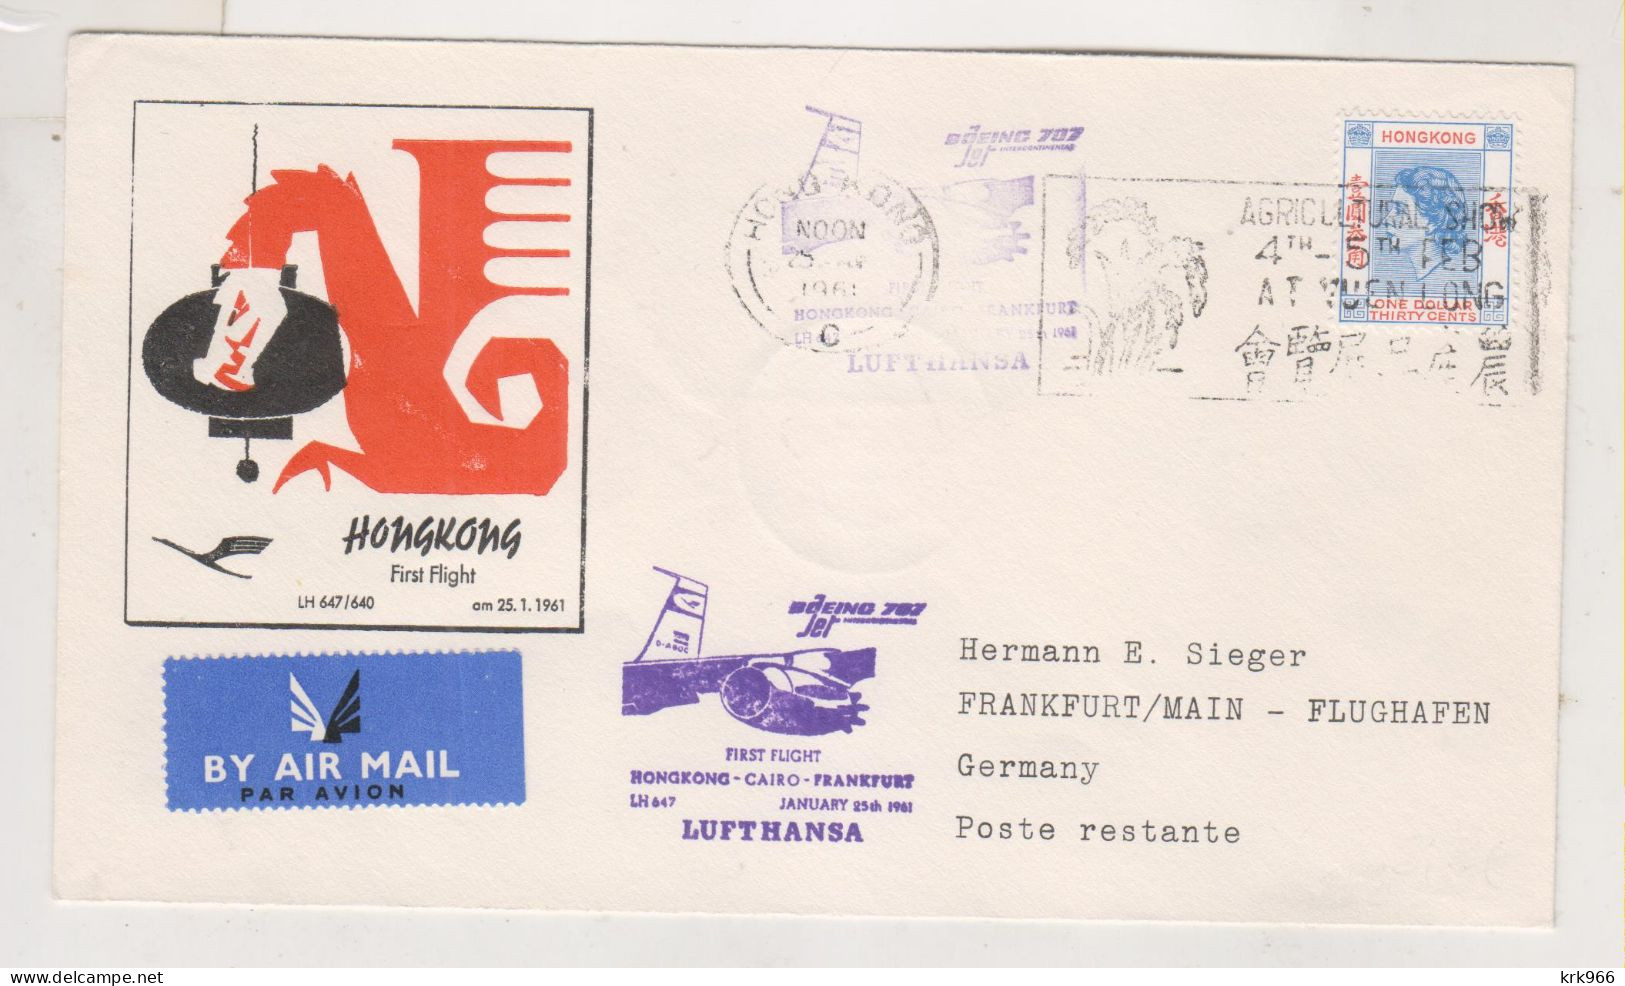 HONG KONG 1961 Nice Airmail Cover To Germany First Flight HONG KONG-CAIRO-FRANKFURT - Lettres & Documents